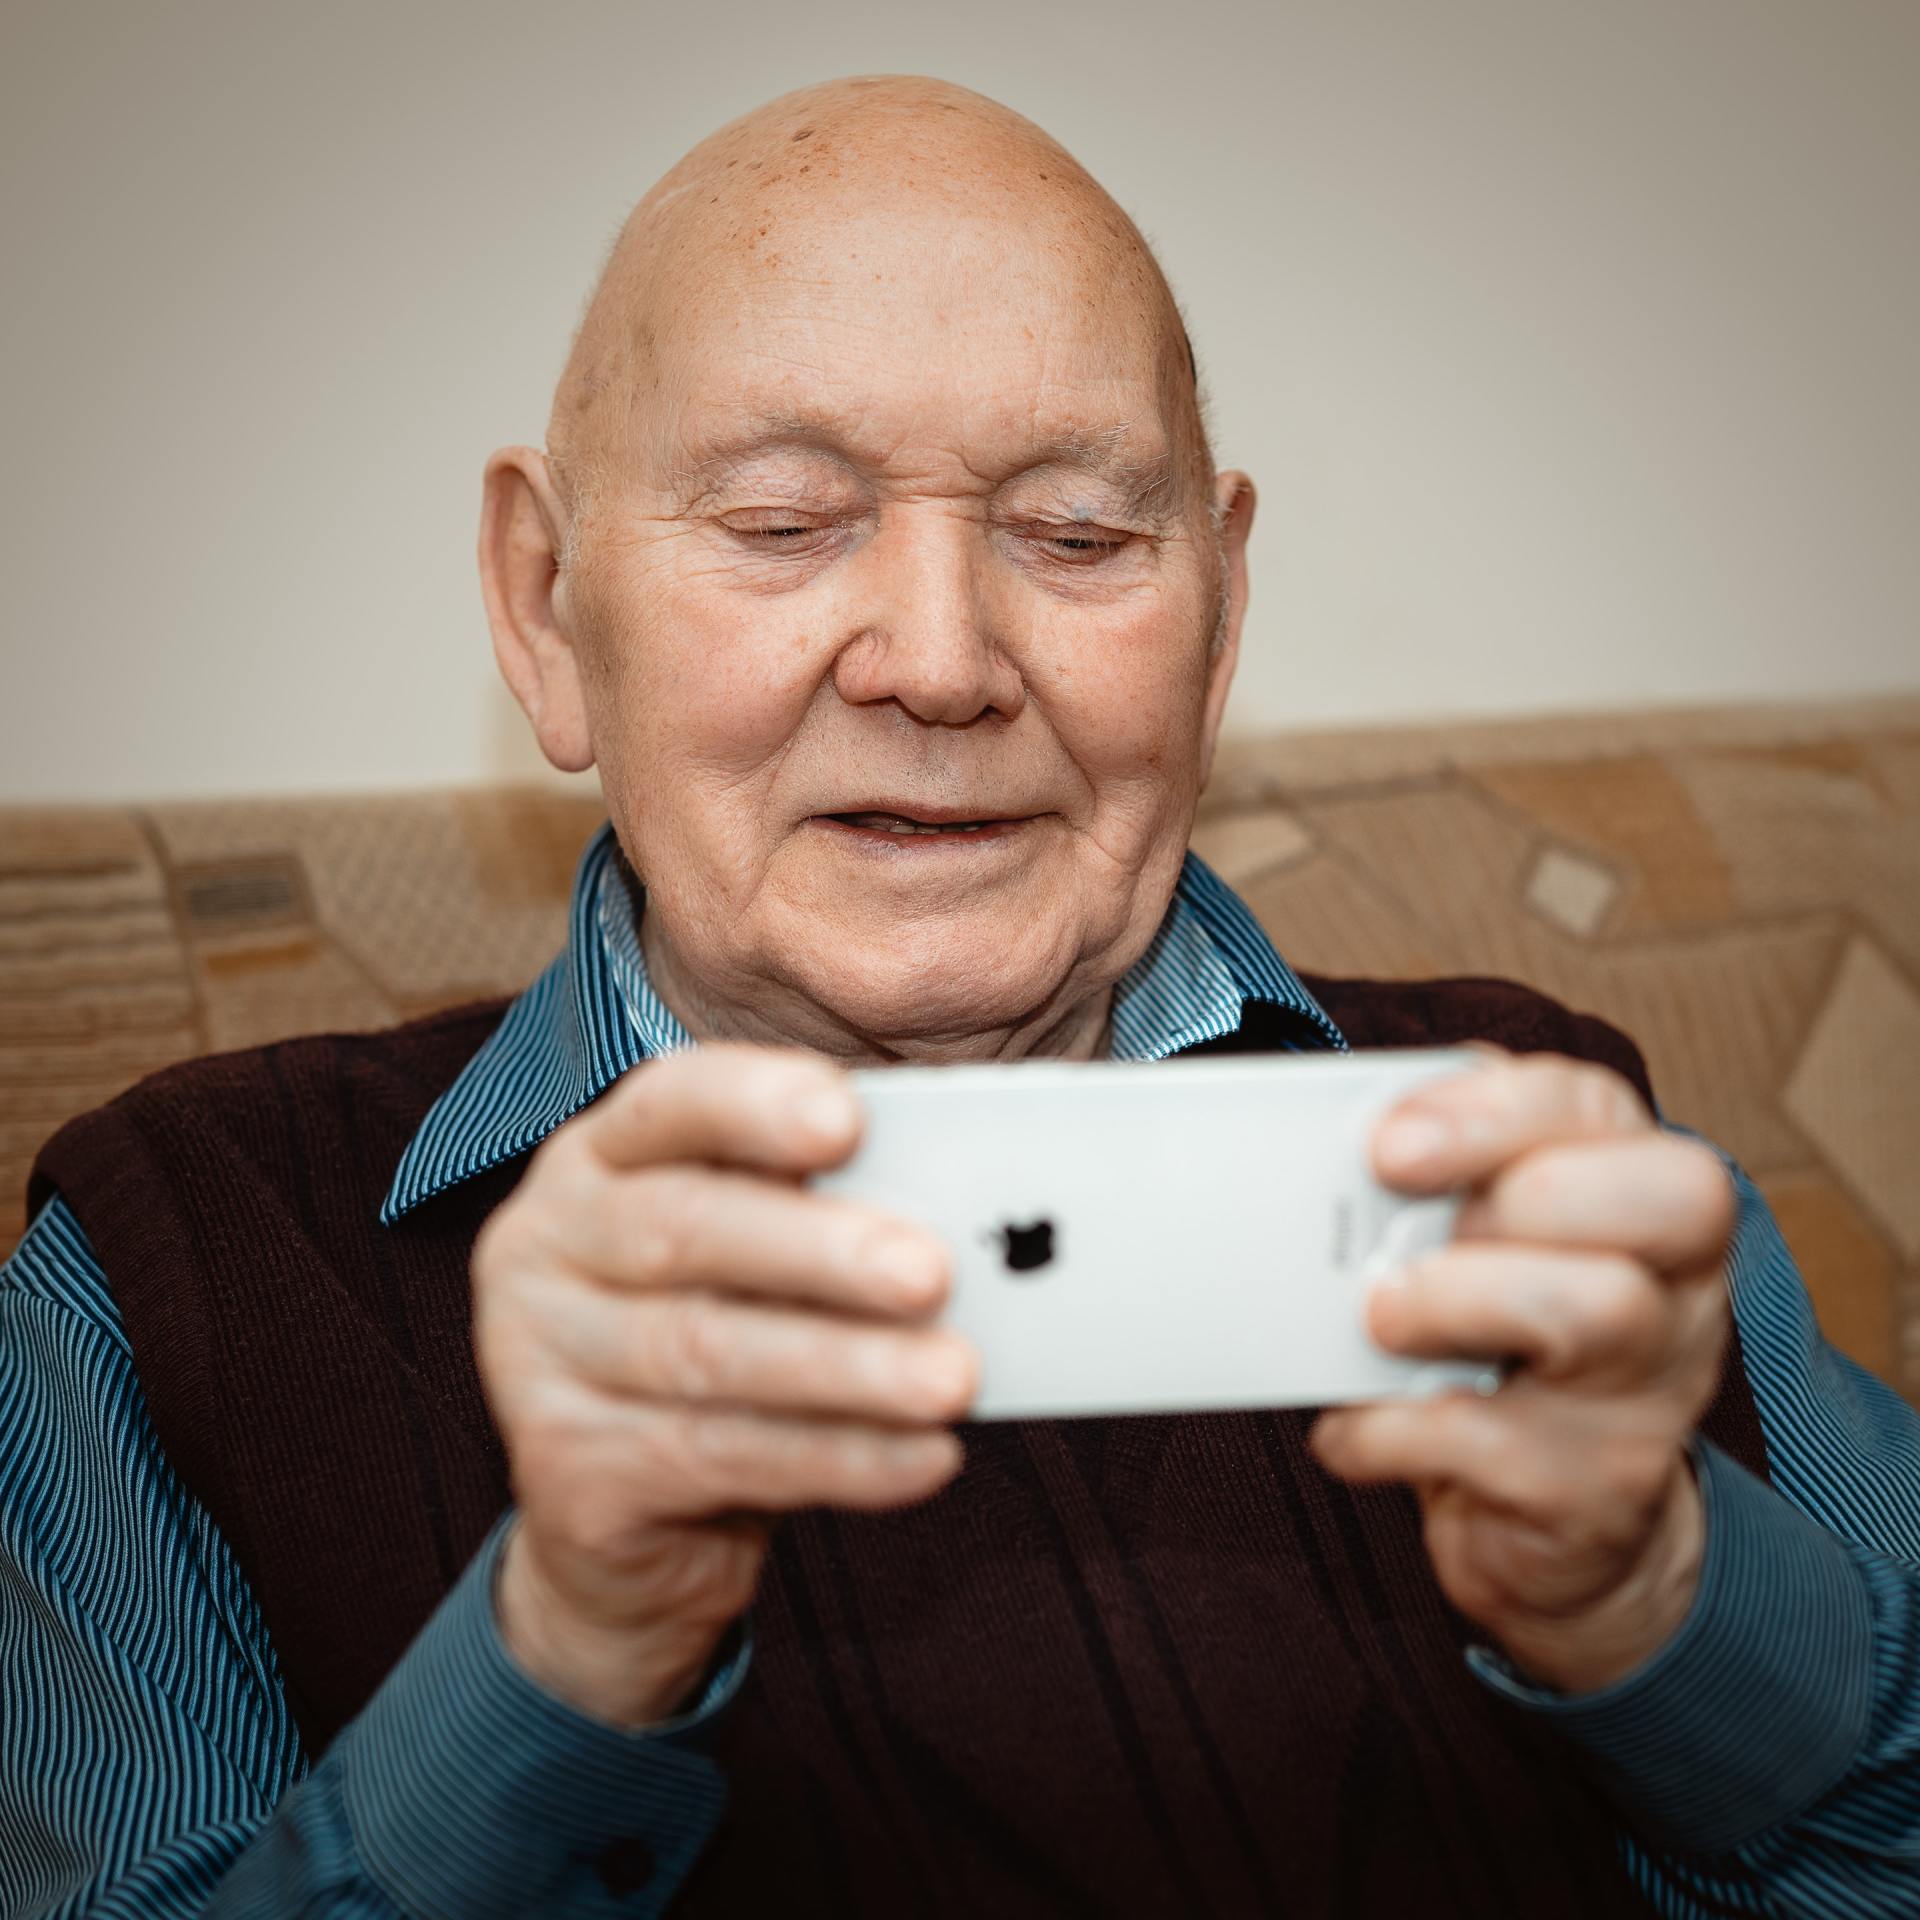 Senior Man with Cellphone